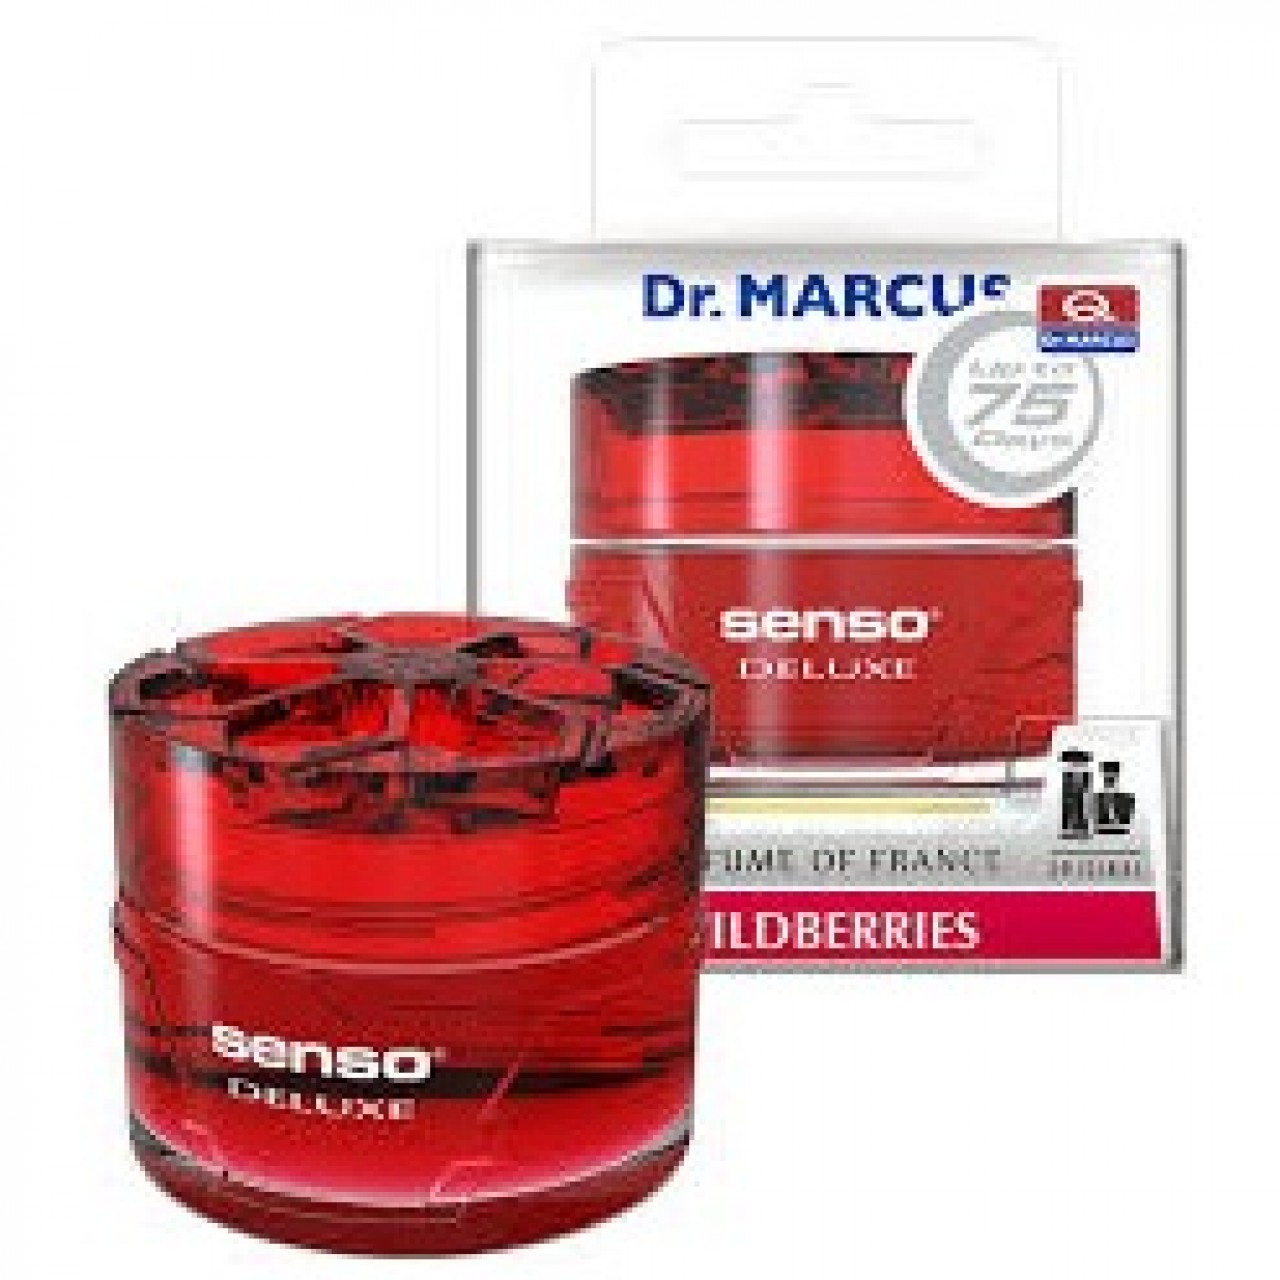 Dr. Marcus Senso French Gel Air Freshener - Wildberries 50ml